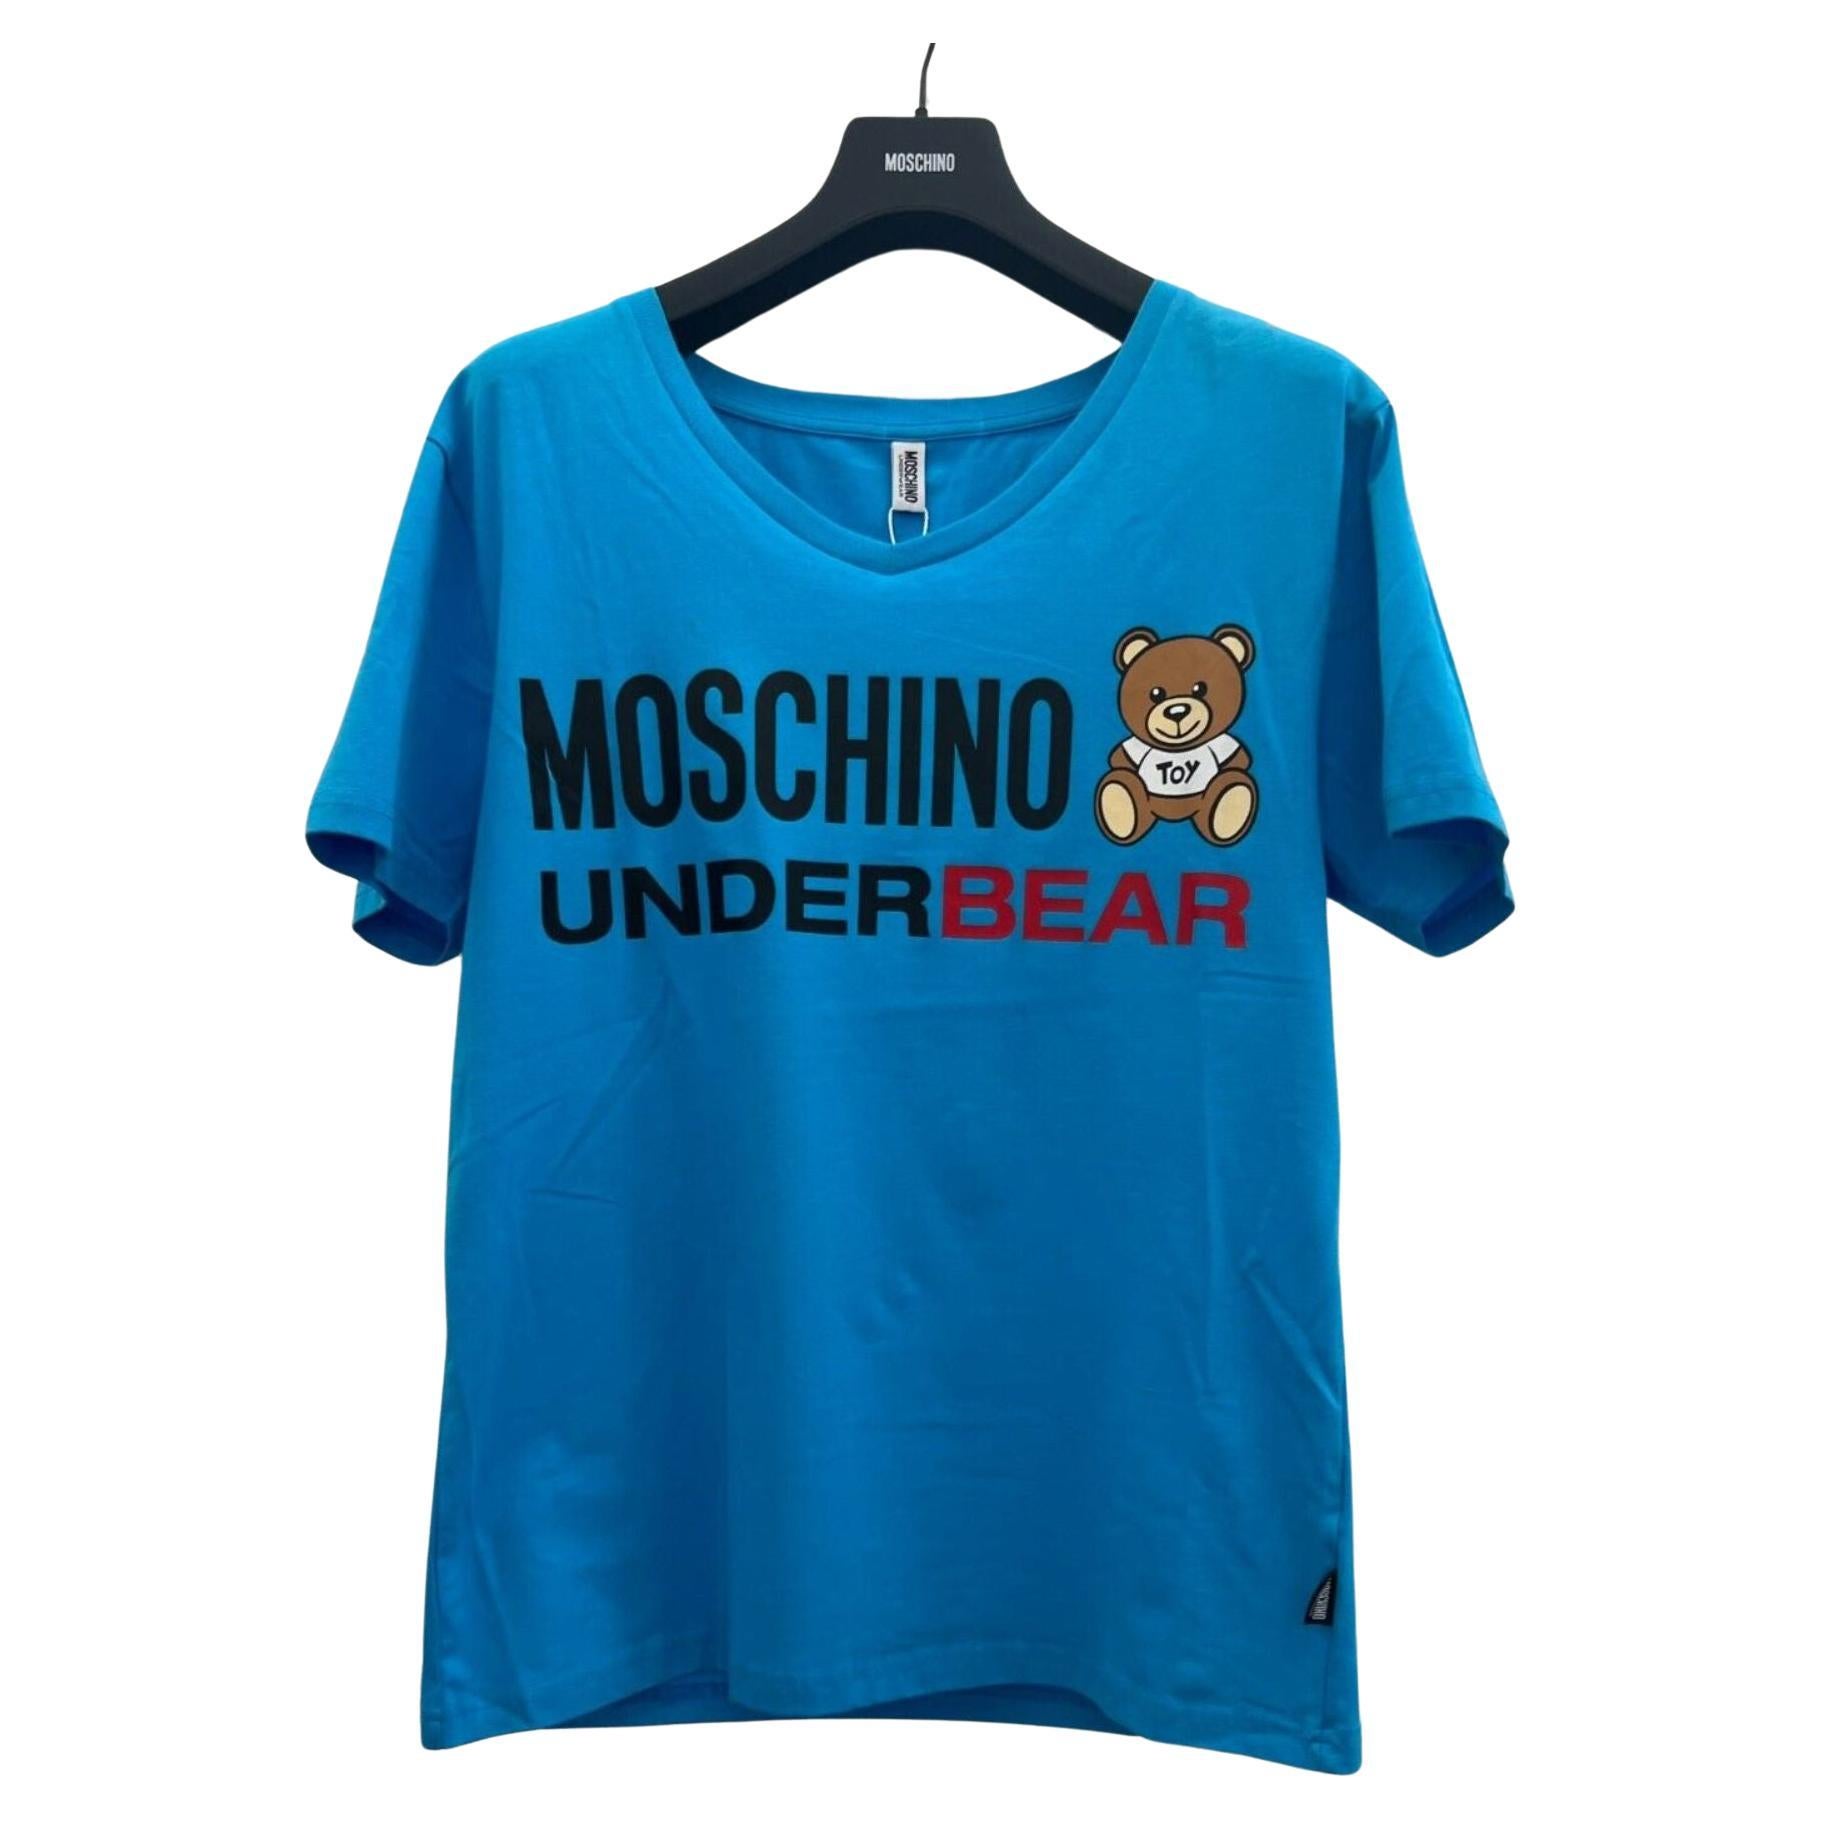 SS20 Moschino Underwear Underbear Teddy Bear T-shirt by Jeremy Scott, Size L For Sale